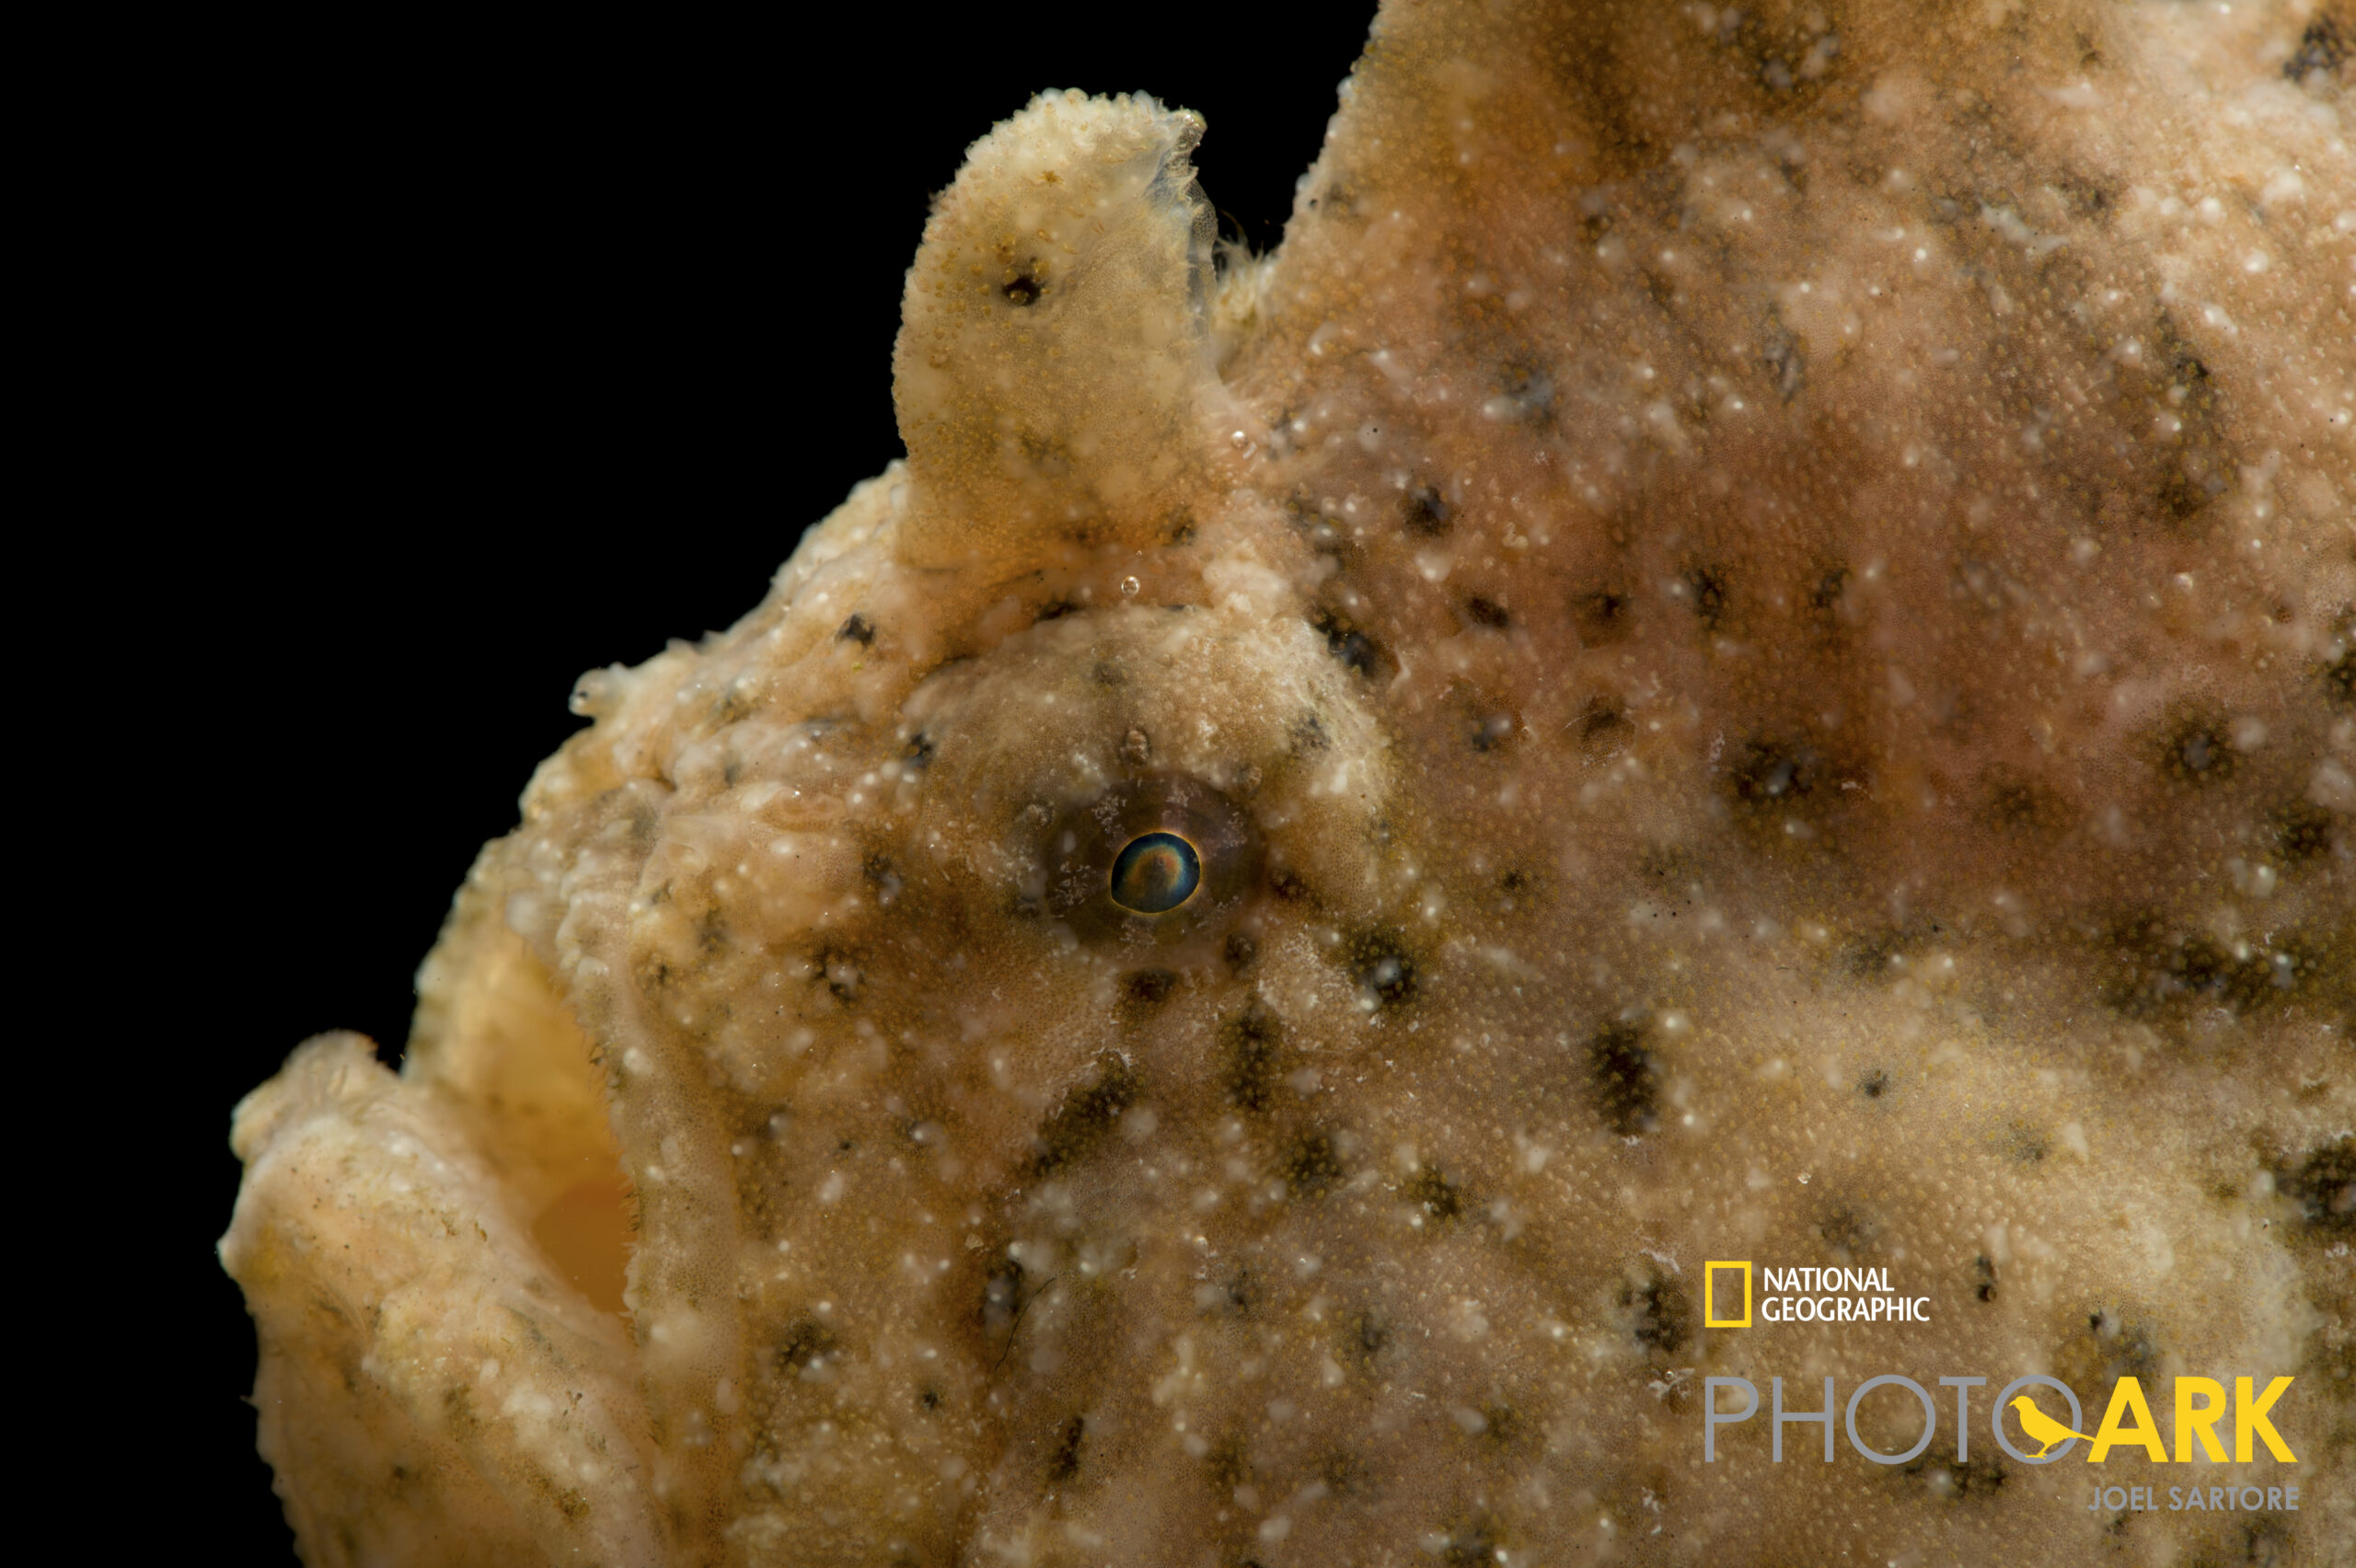 Ocellated frogfish (Antennarius ocellatus) at Gulf Specimen in Panacea, FL.